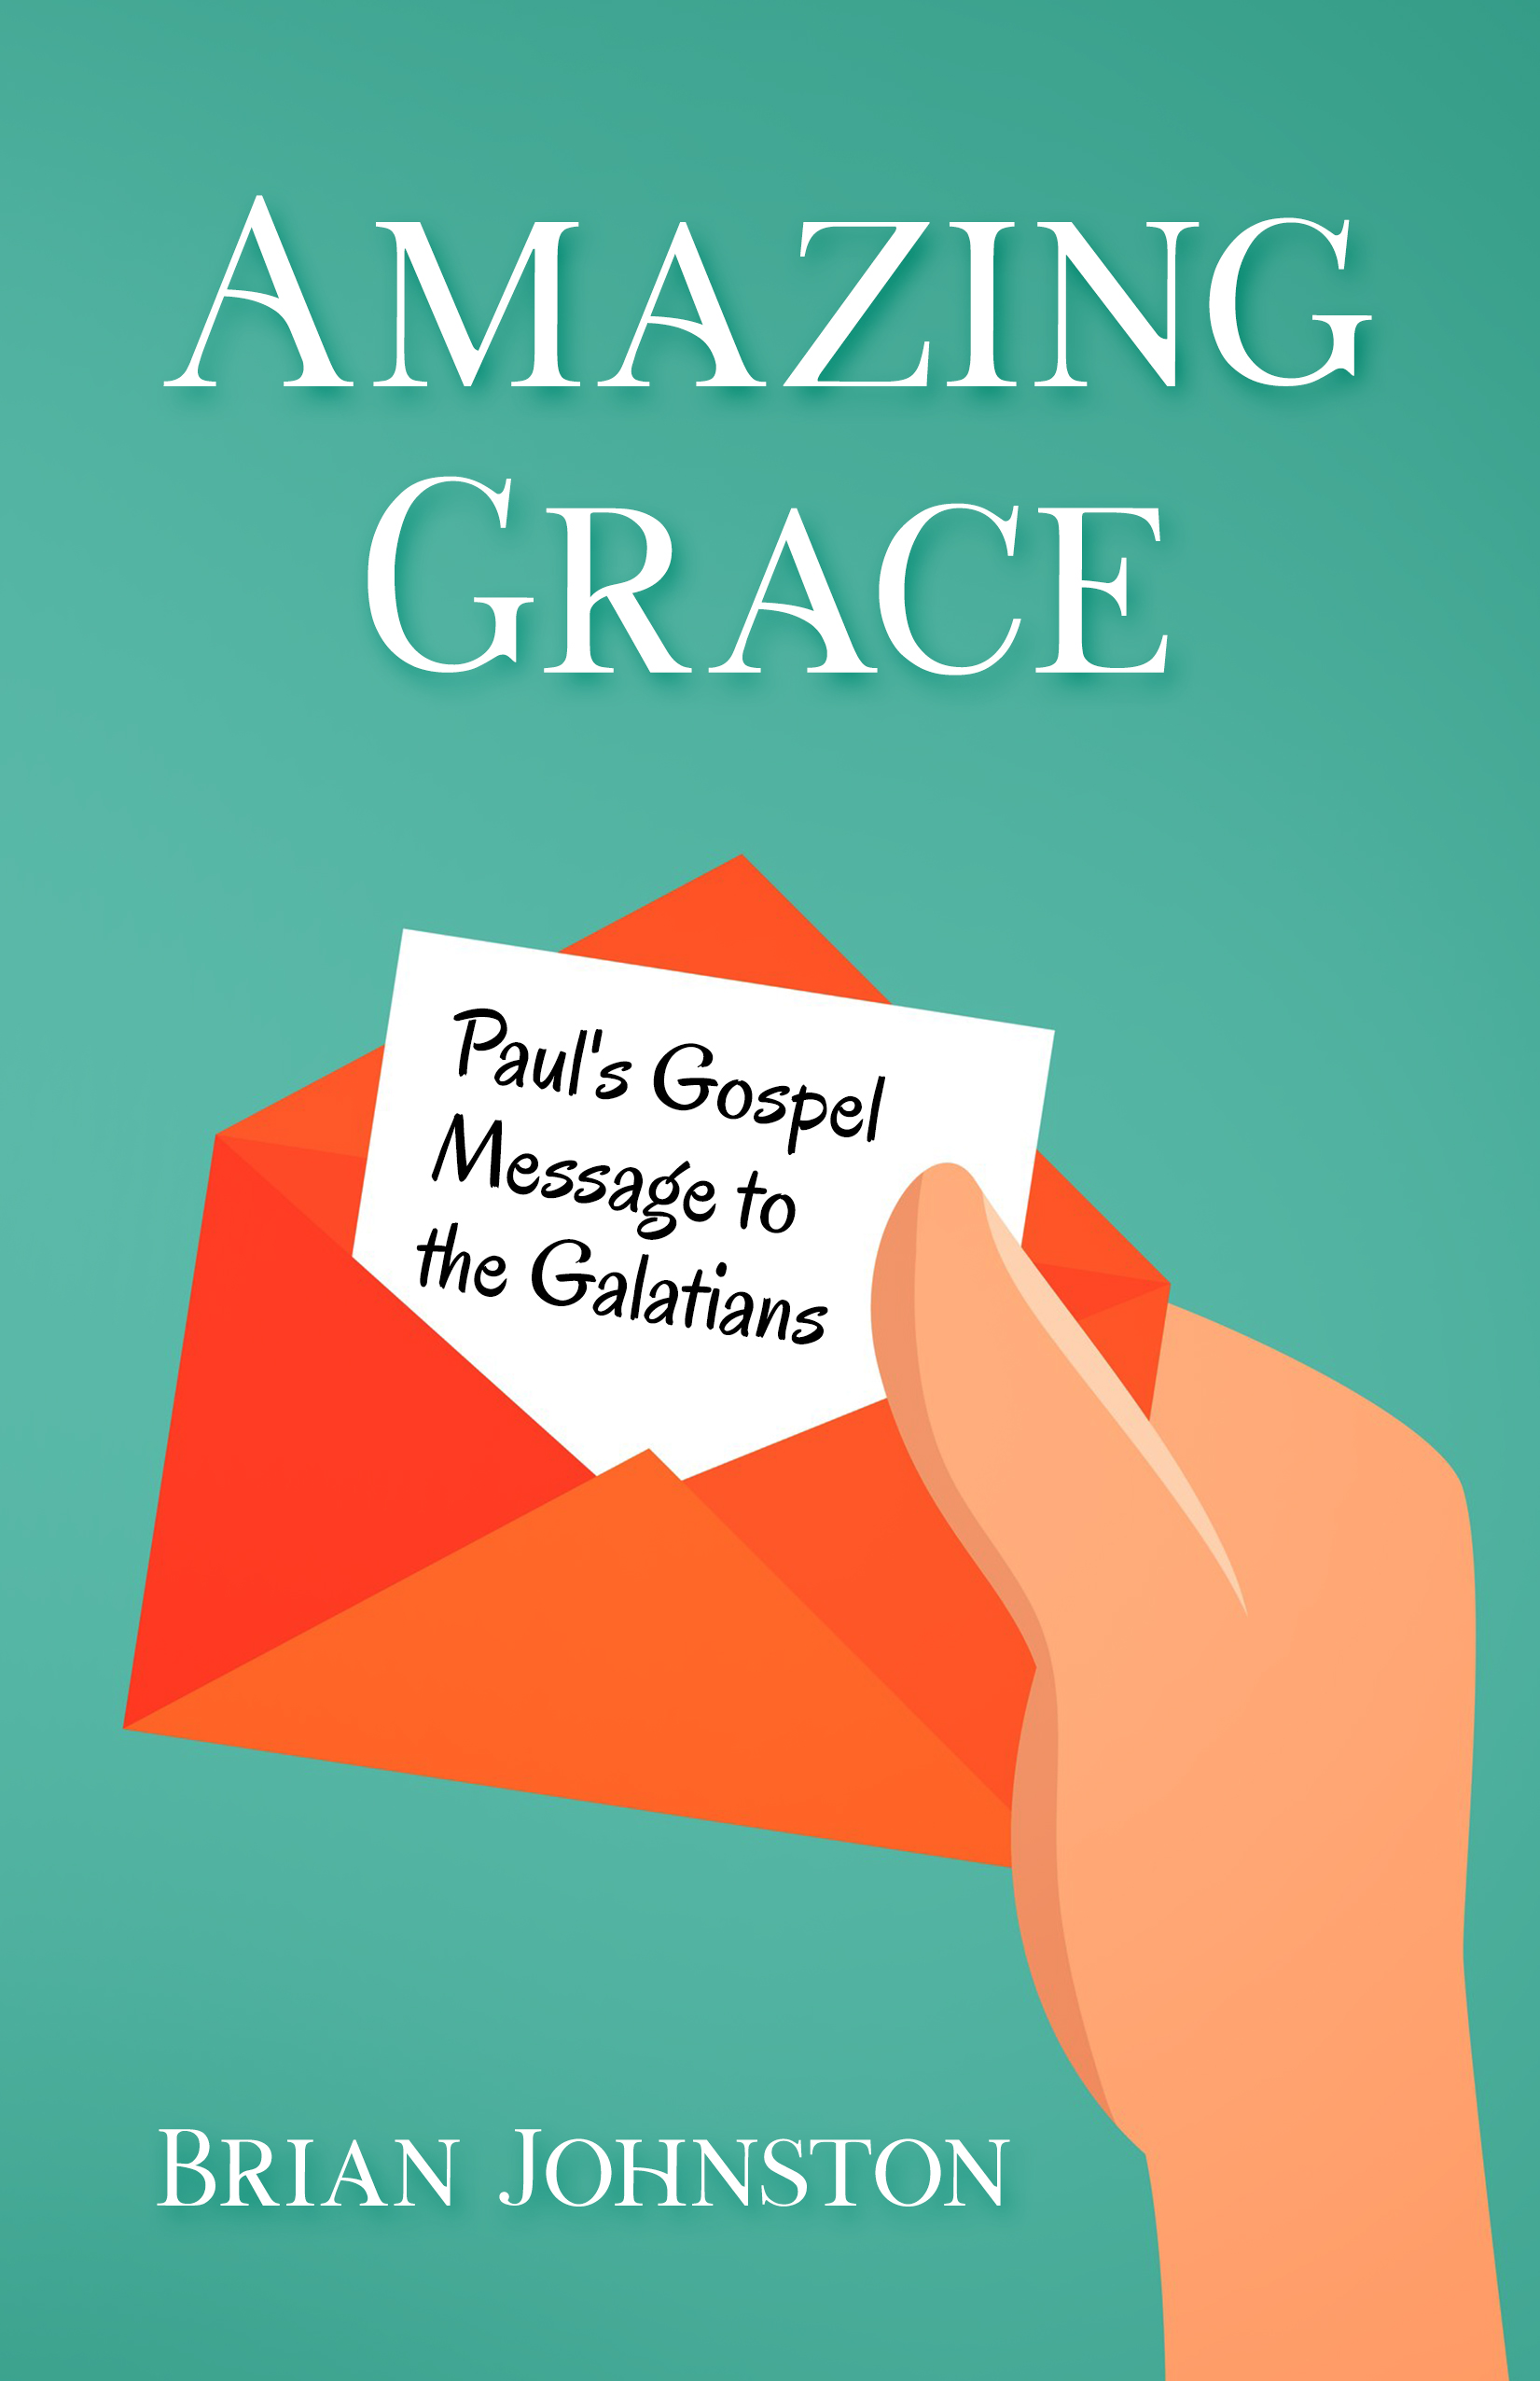 Amazing Grace! Paul's Gospel Message to the Galatians - Part 2: The Handshake